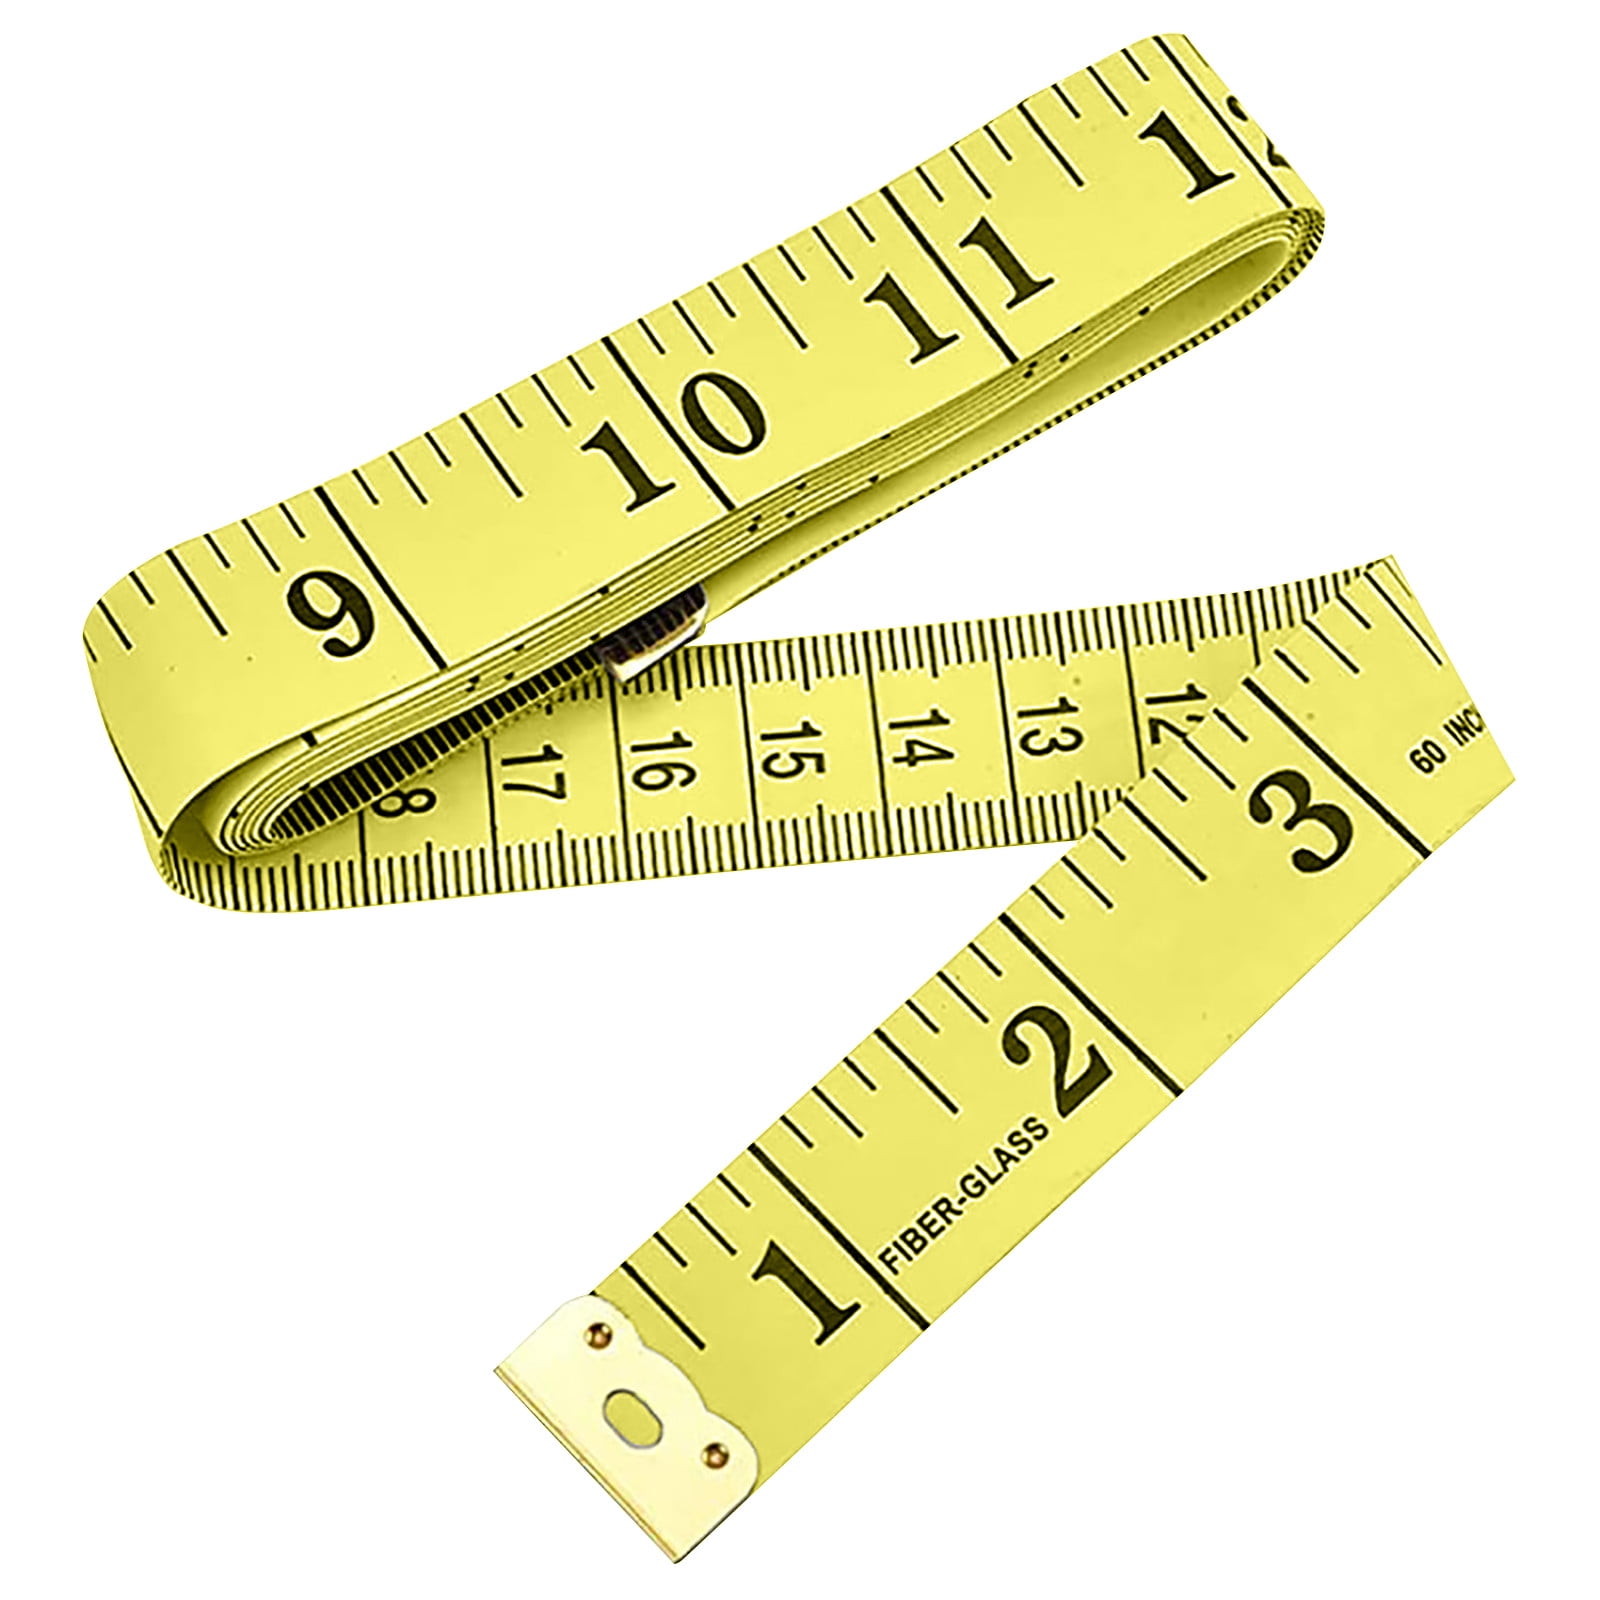 MEDca Body Fat Caliper Measuring Tape for Body Skinfold Calipers 